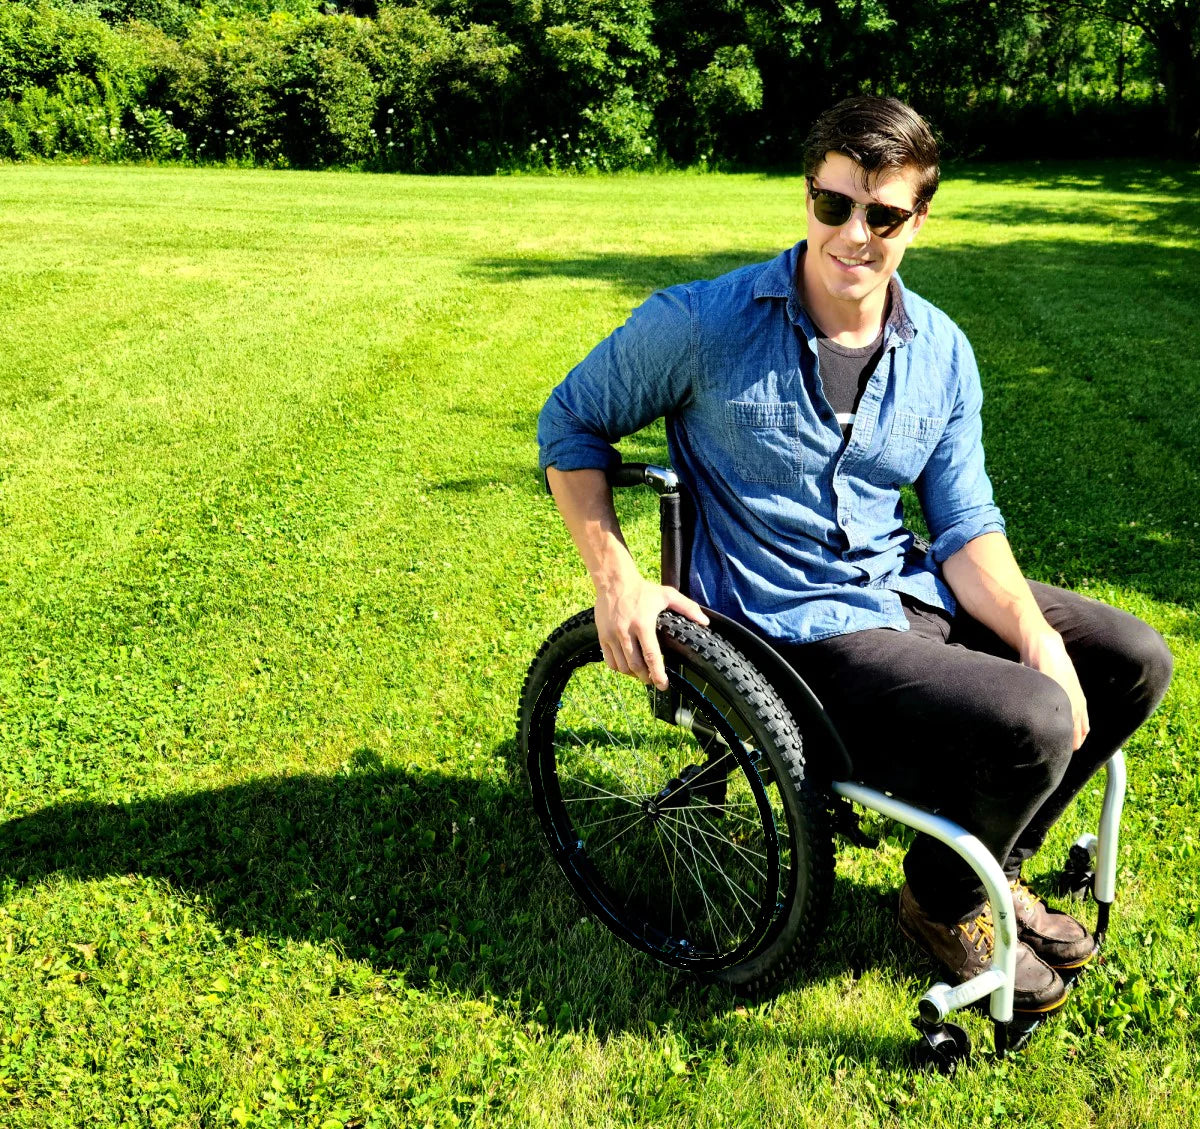 SUMO Wheelchair Wheels in grass